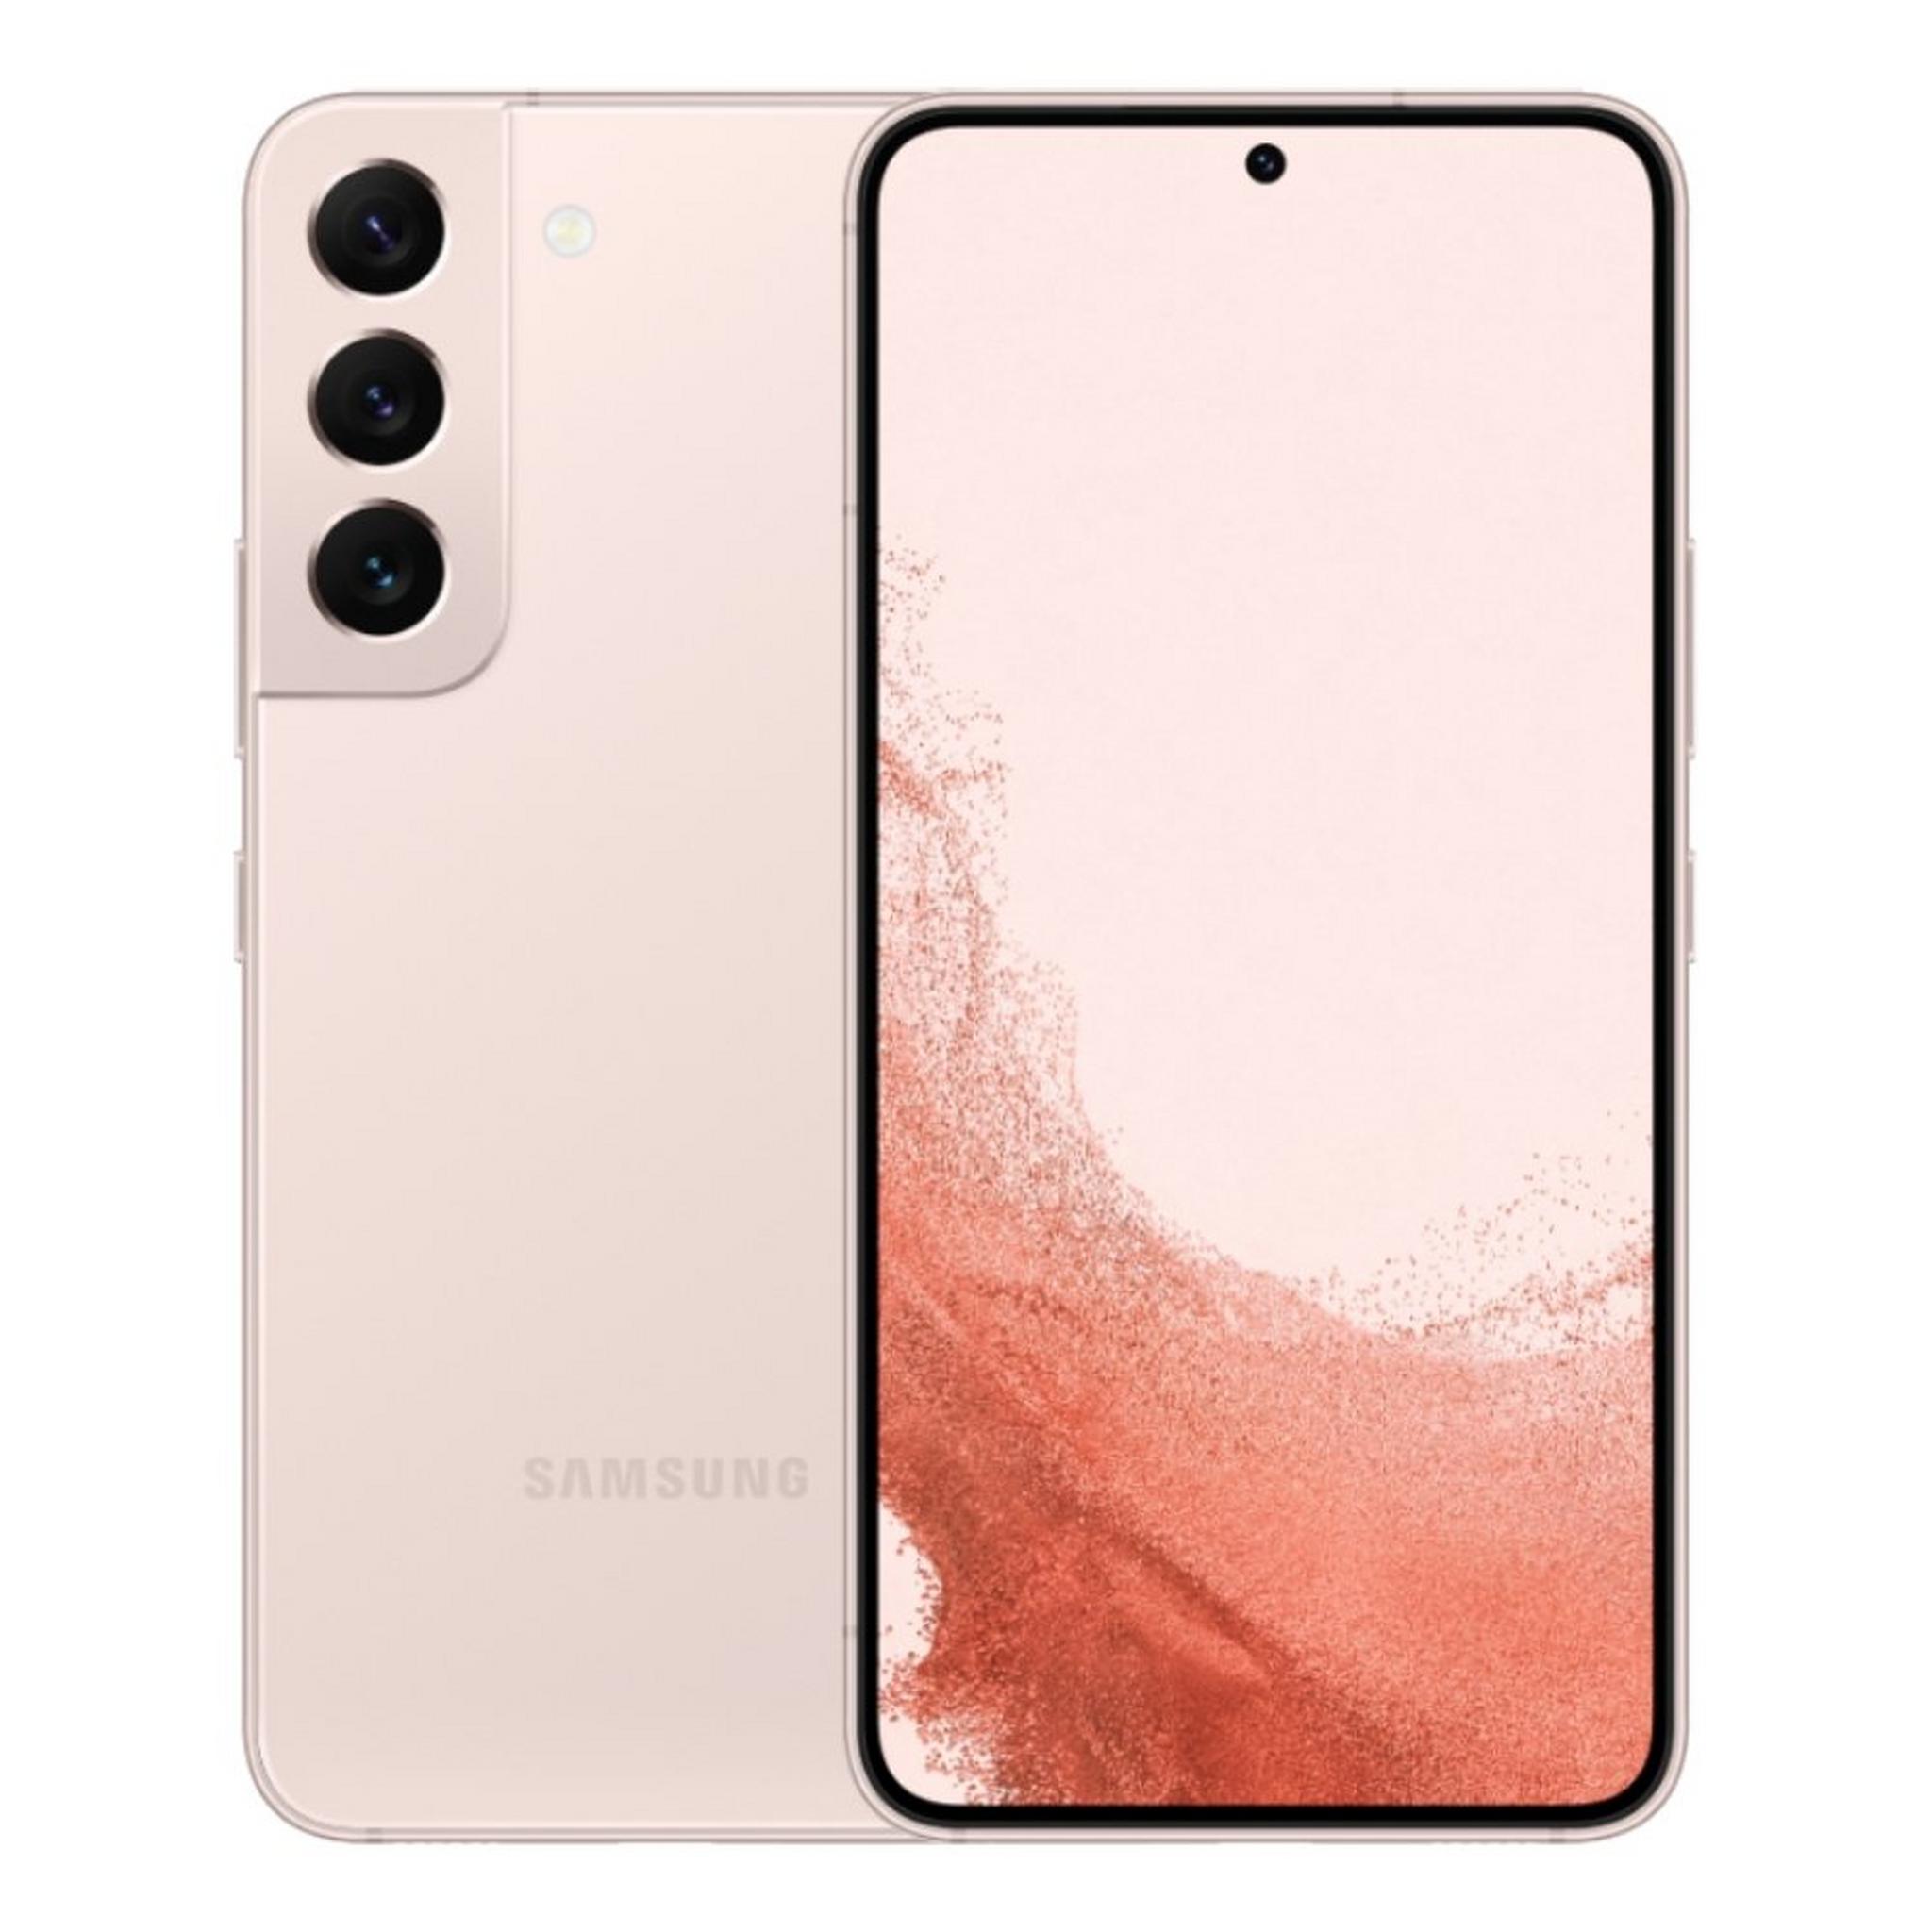 Samsung Galaxy S22 5G 256GB Phone - Pink Gold